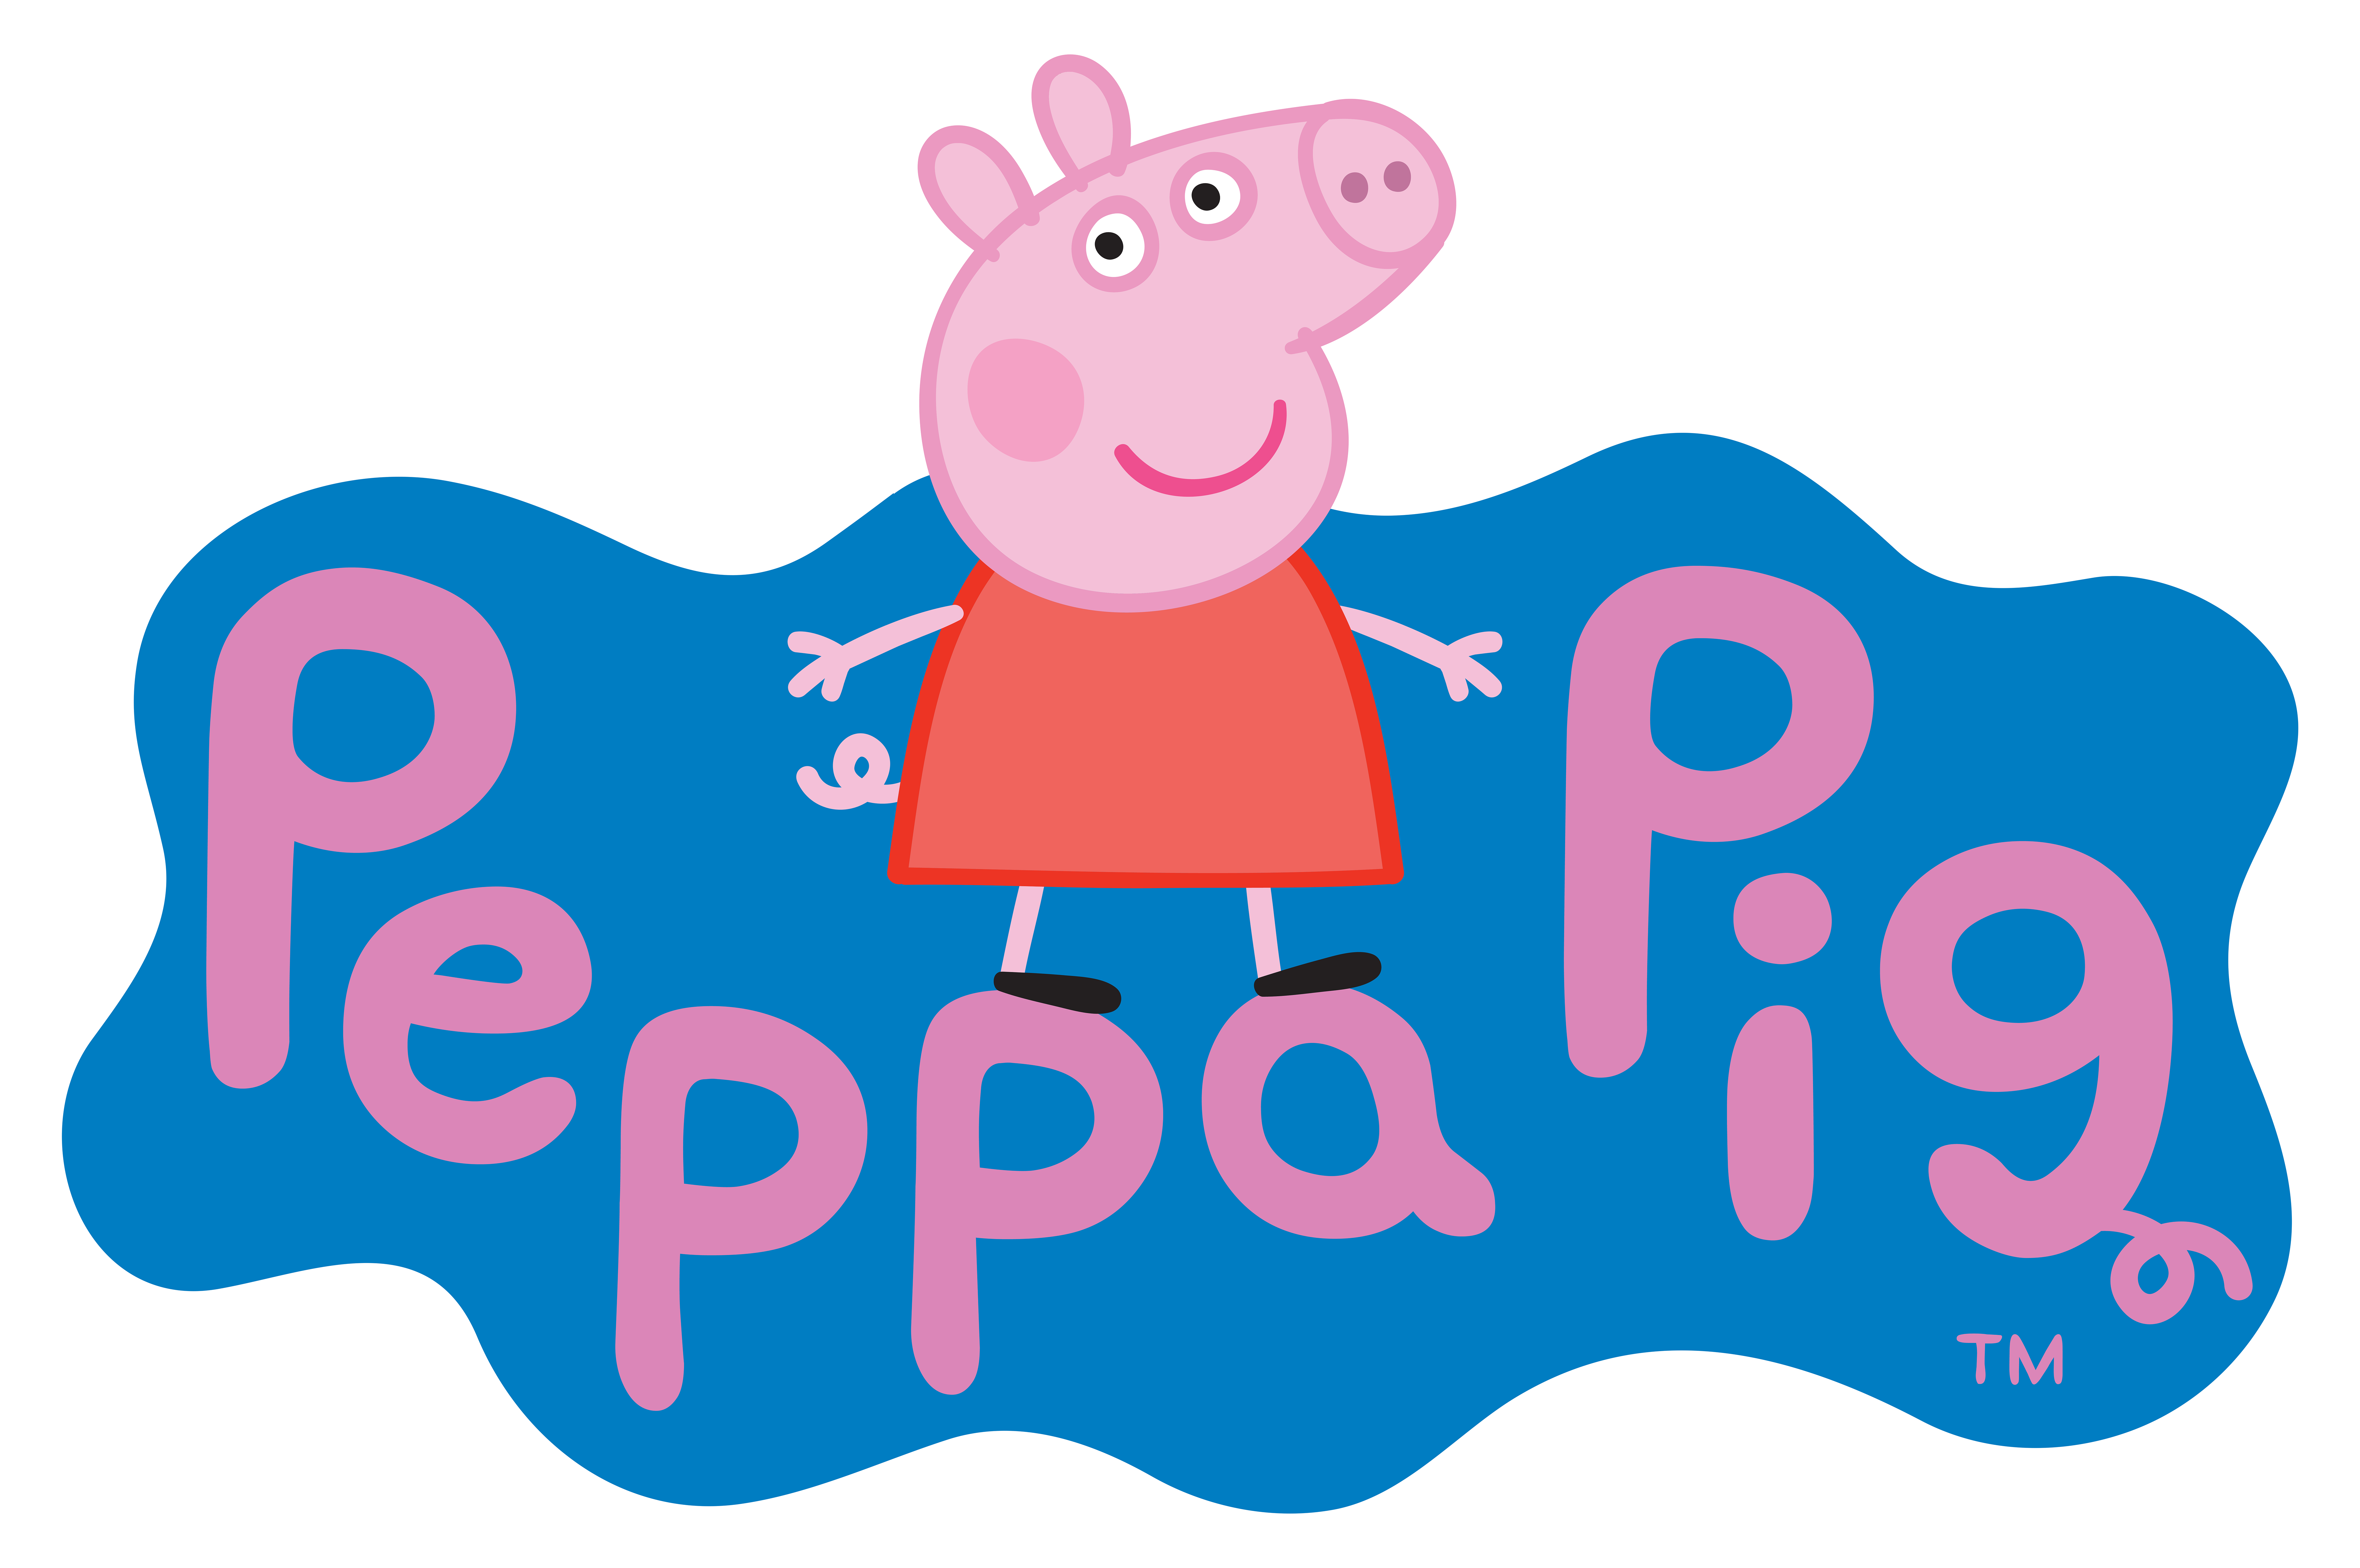 Peppa Pig Logo Transparent PNG Clip Art Image | Gallery ...